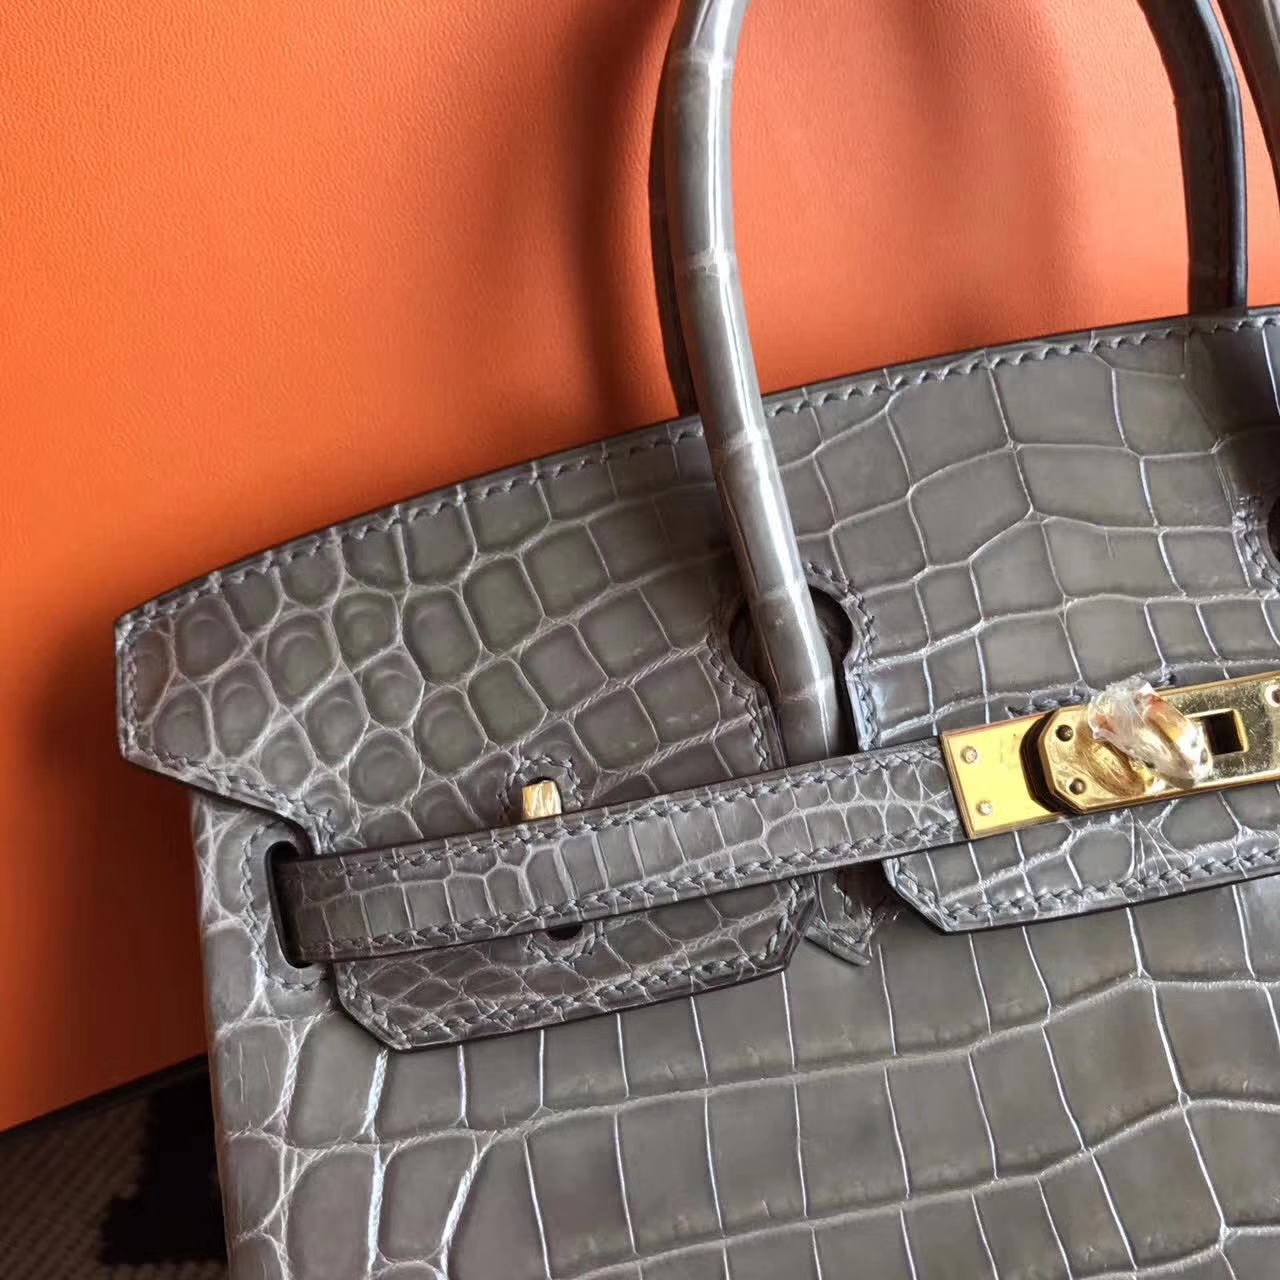 Hot Sale Hermes Crocodile Shiny Leather Birkin25cm Bag in C18 Etoupe Grey